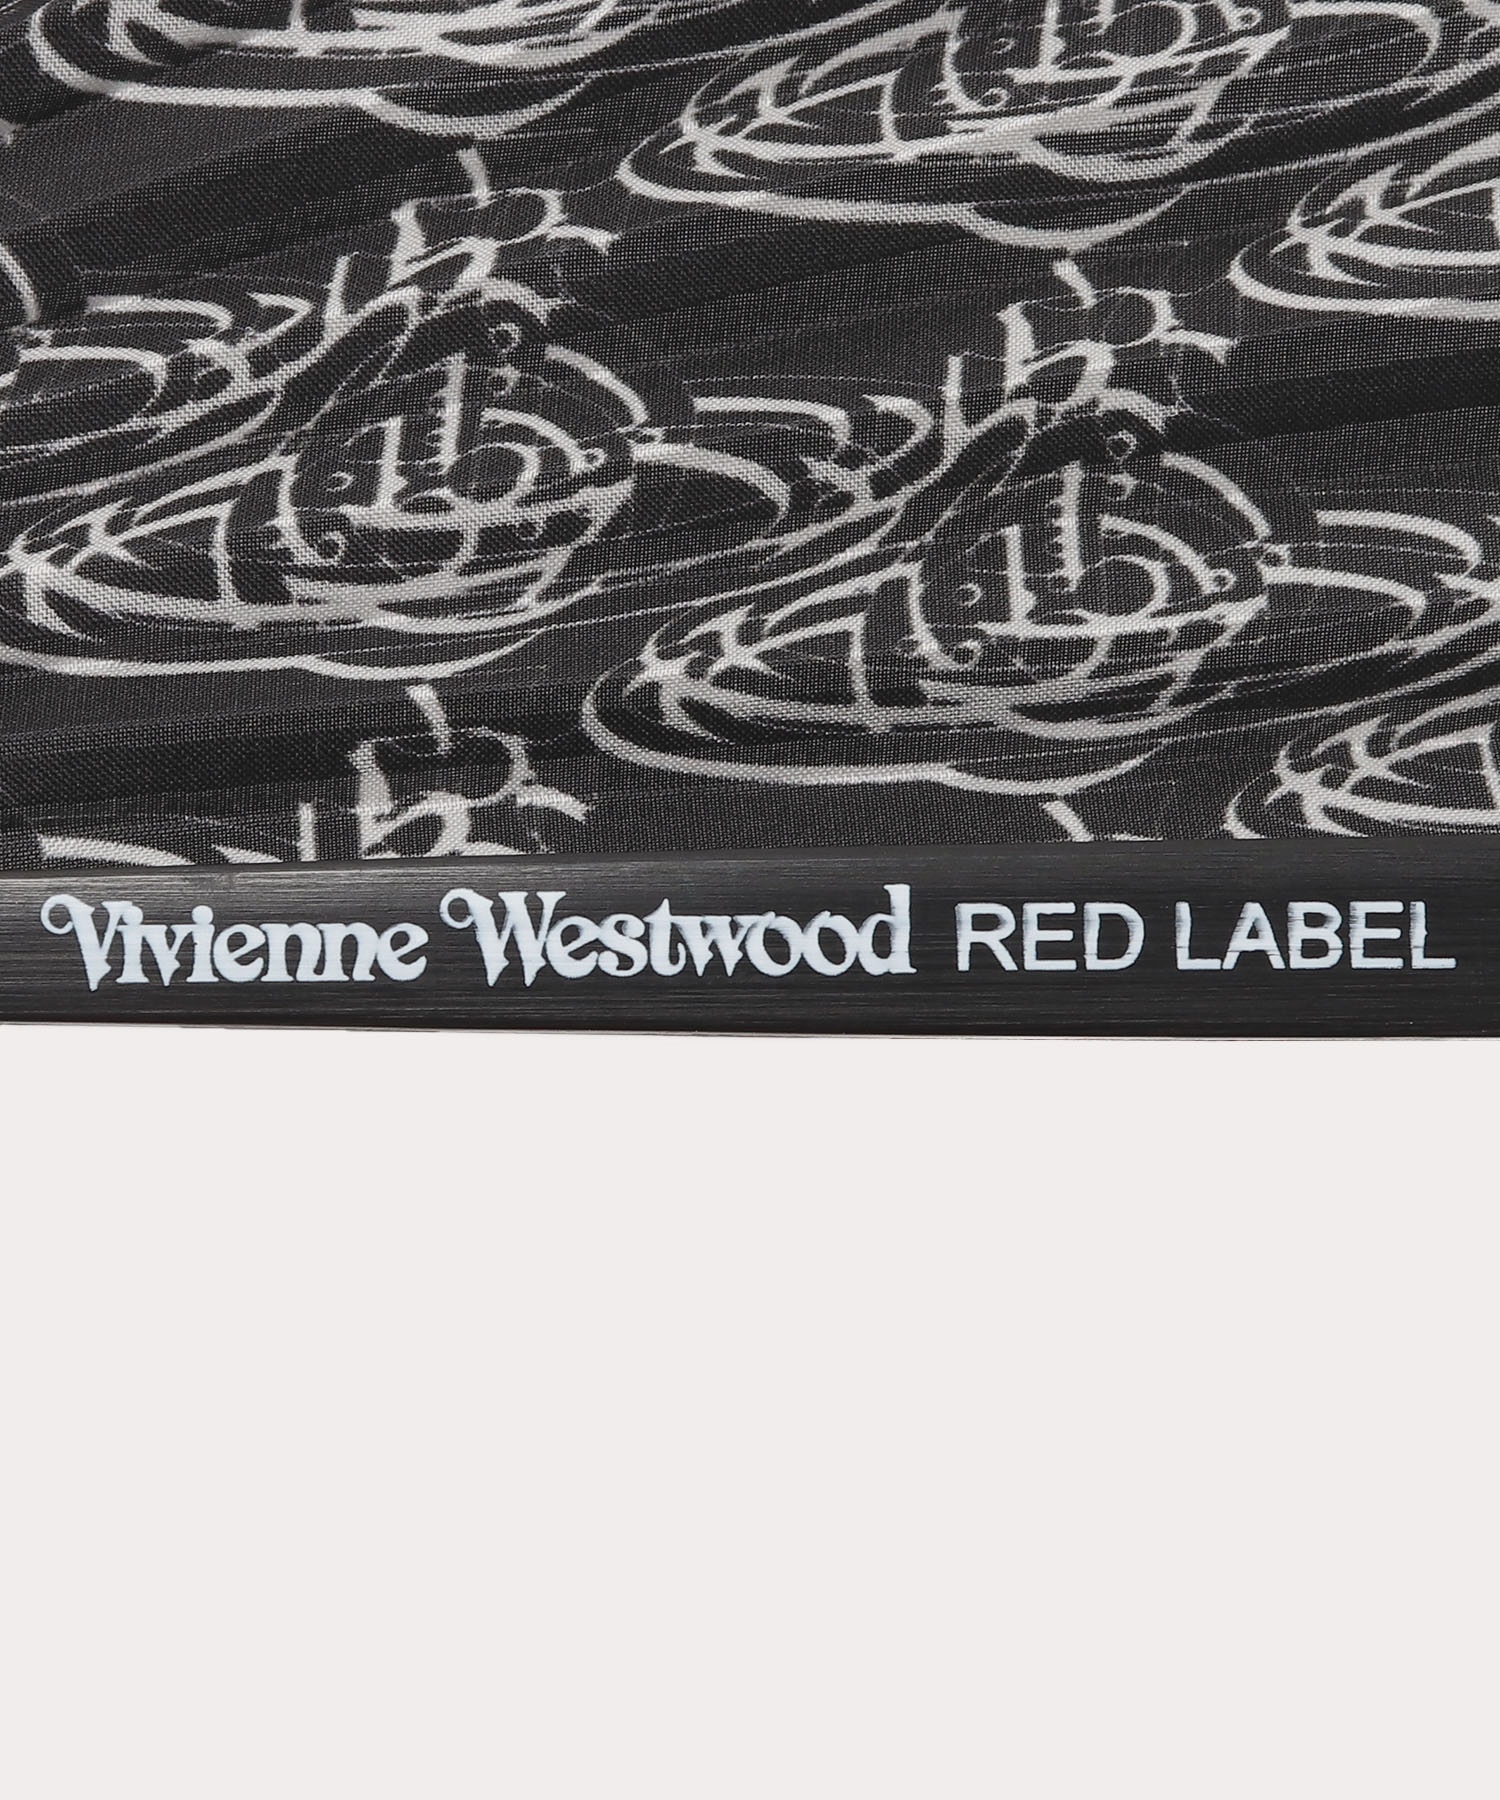 Orbリピート 扇子 ブラック系 レディース 公式通販 ヴィヴィアン ウエストウッド Vivienne Westwood